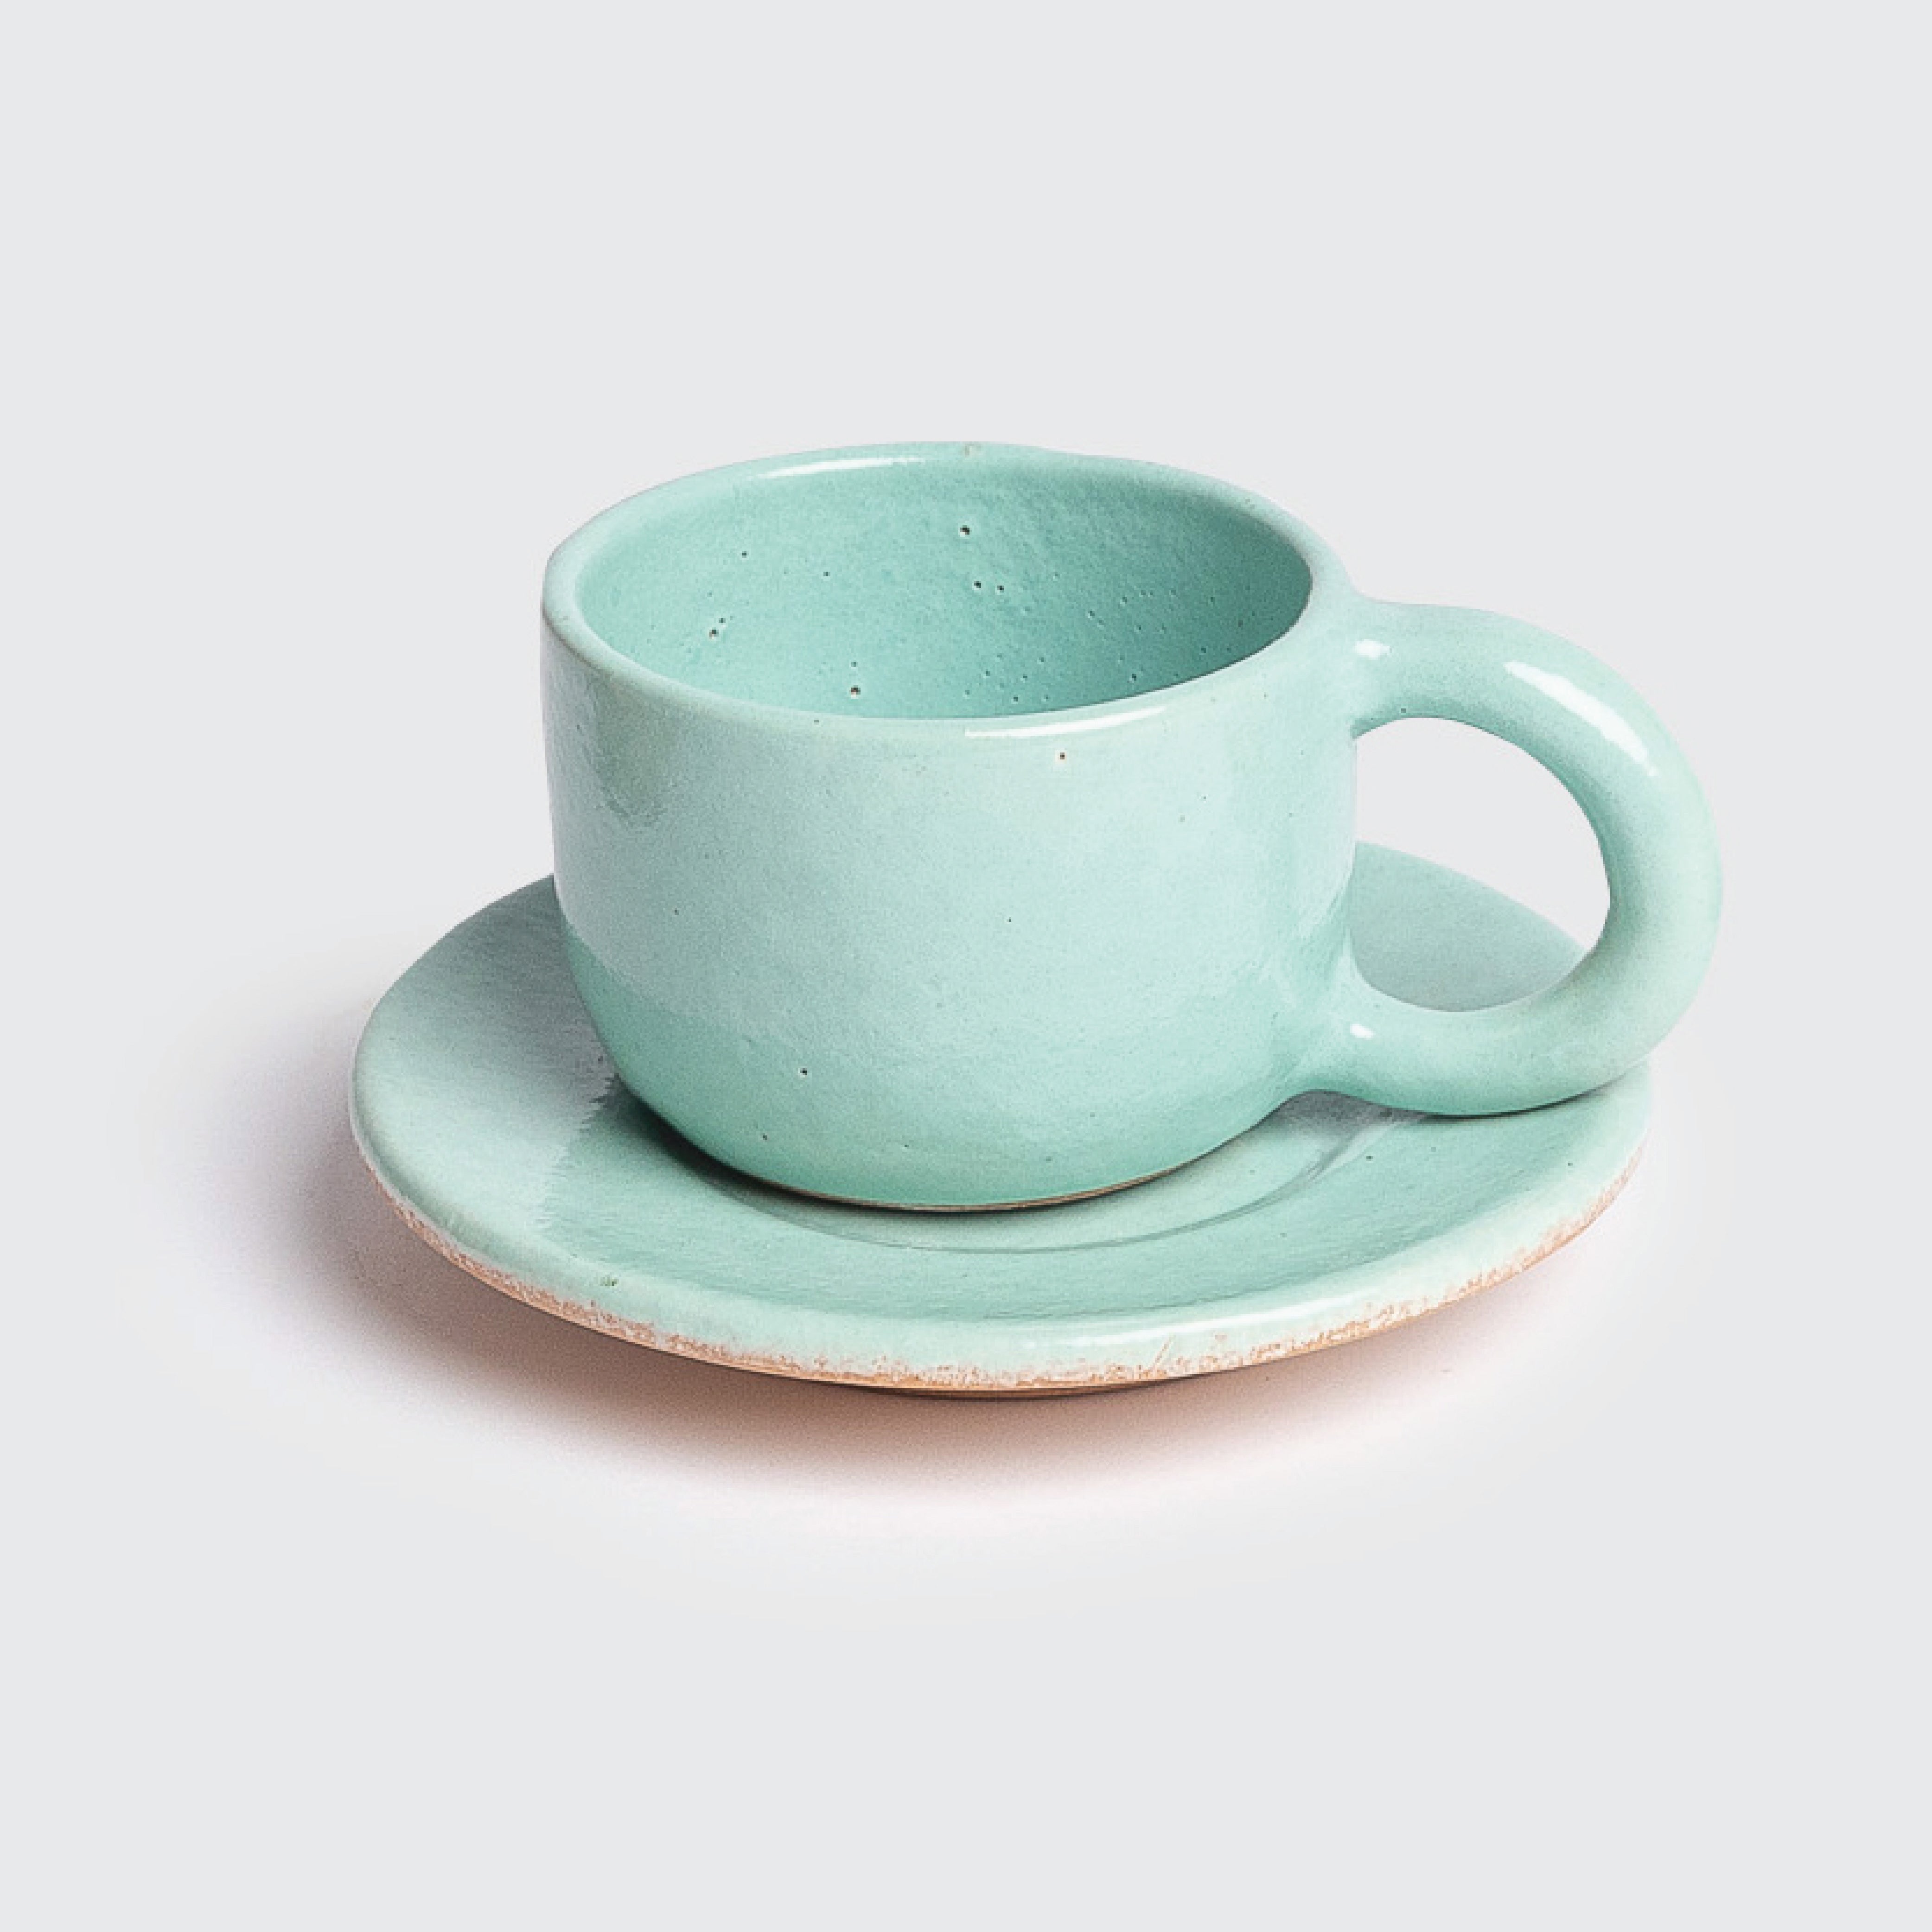 Capsule Pottery Espresso Cup